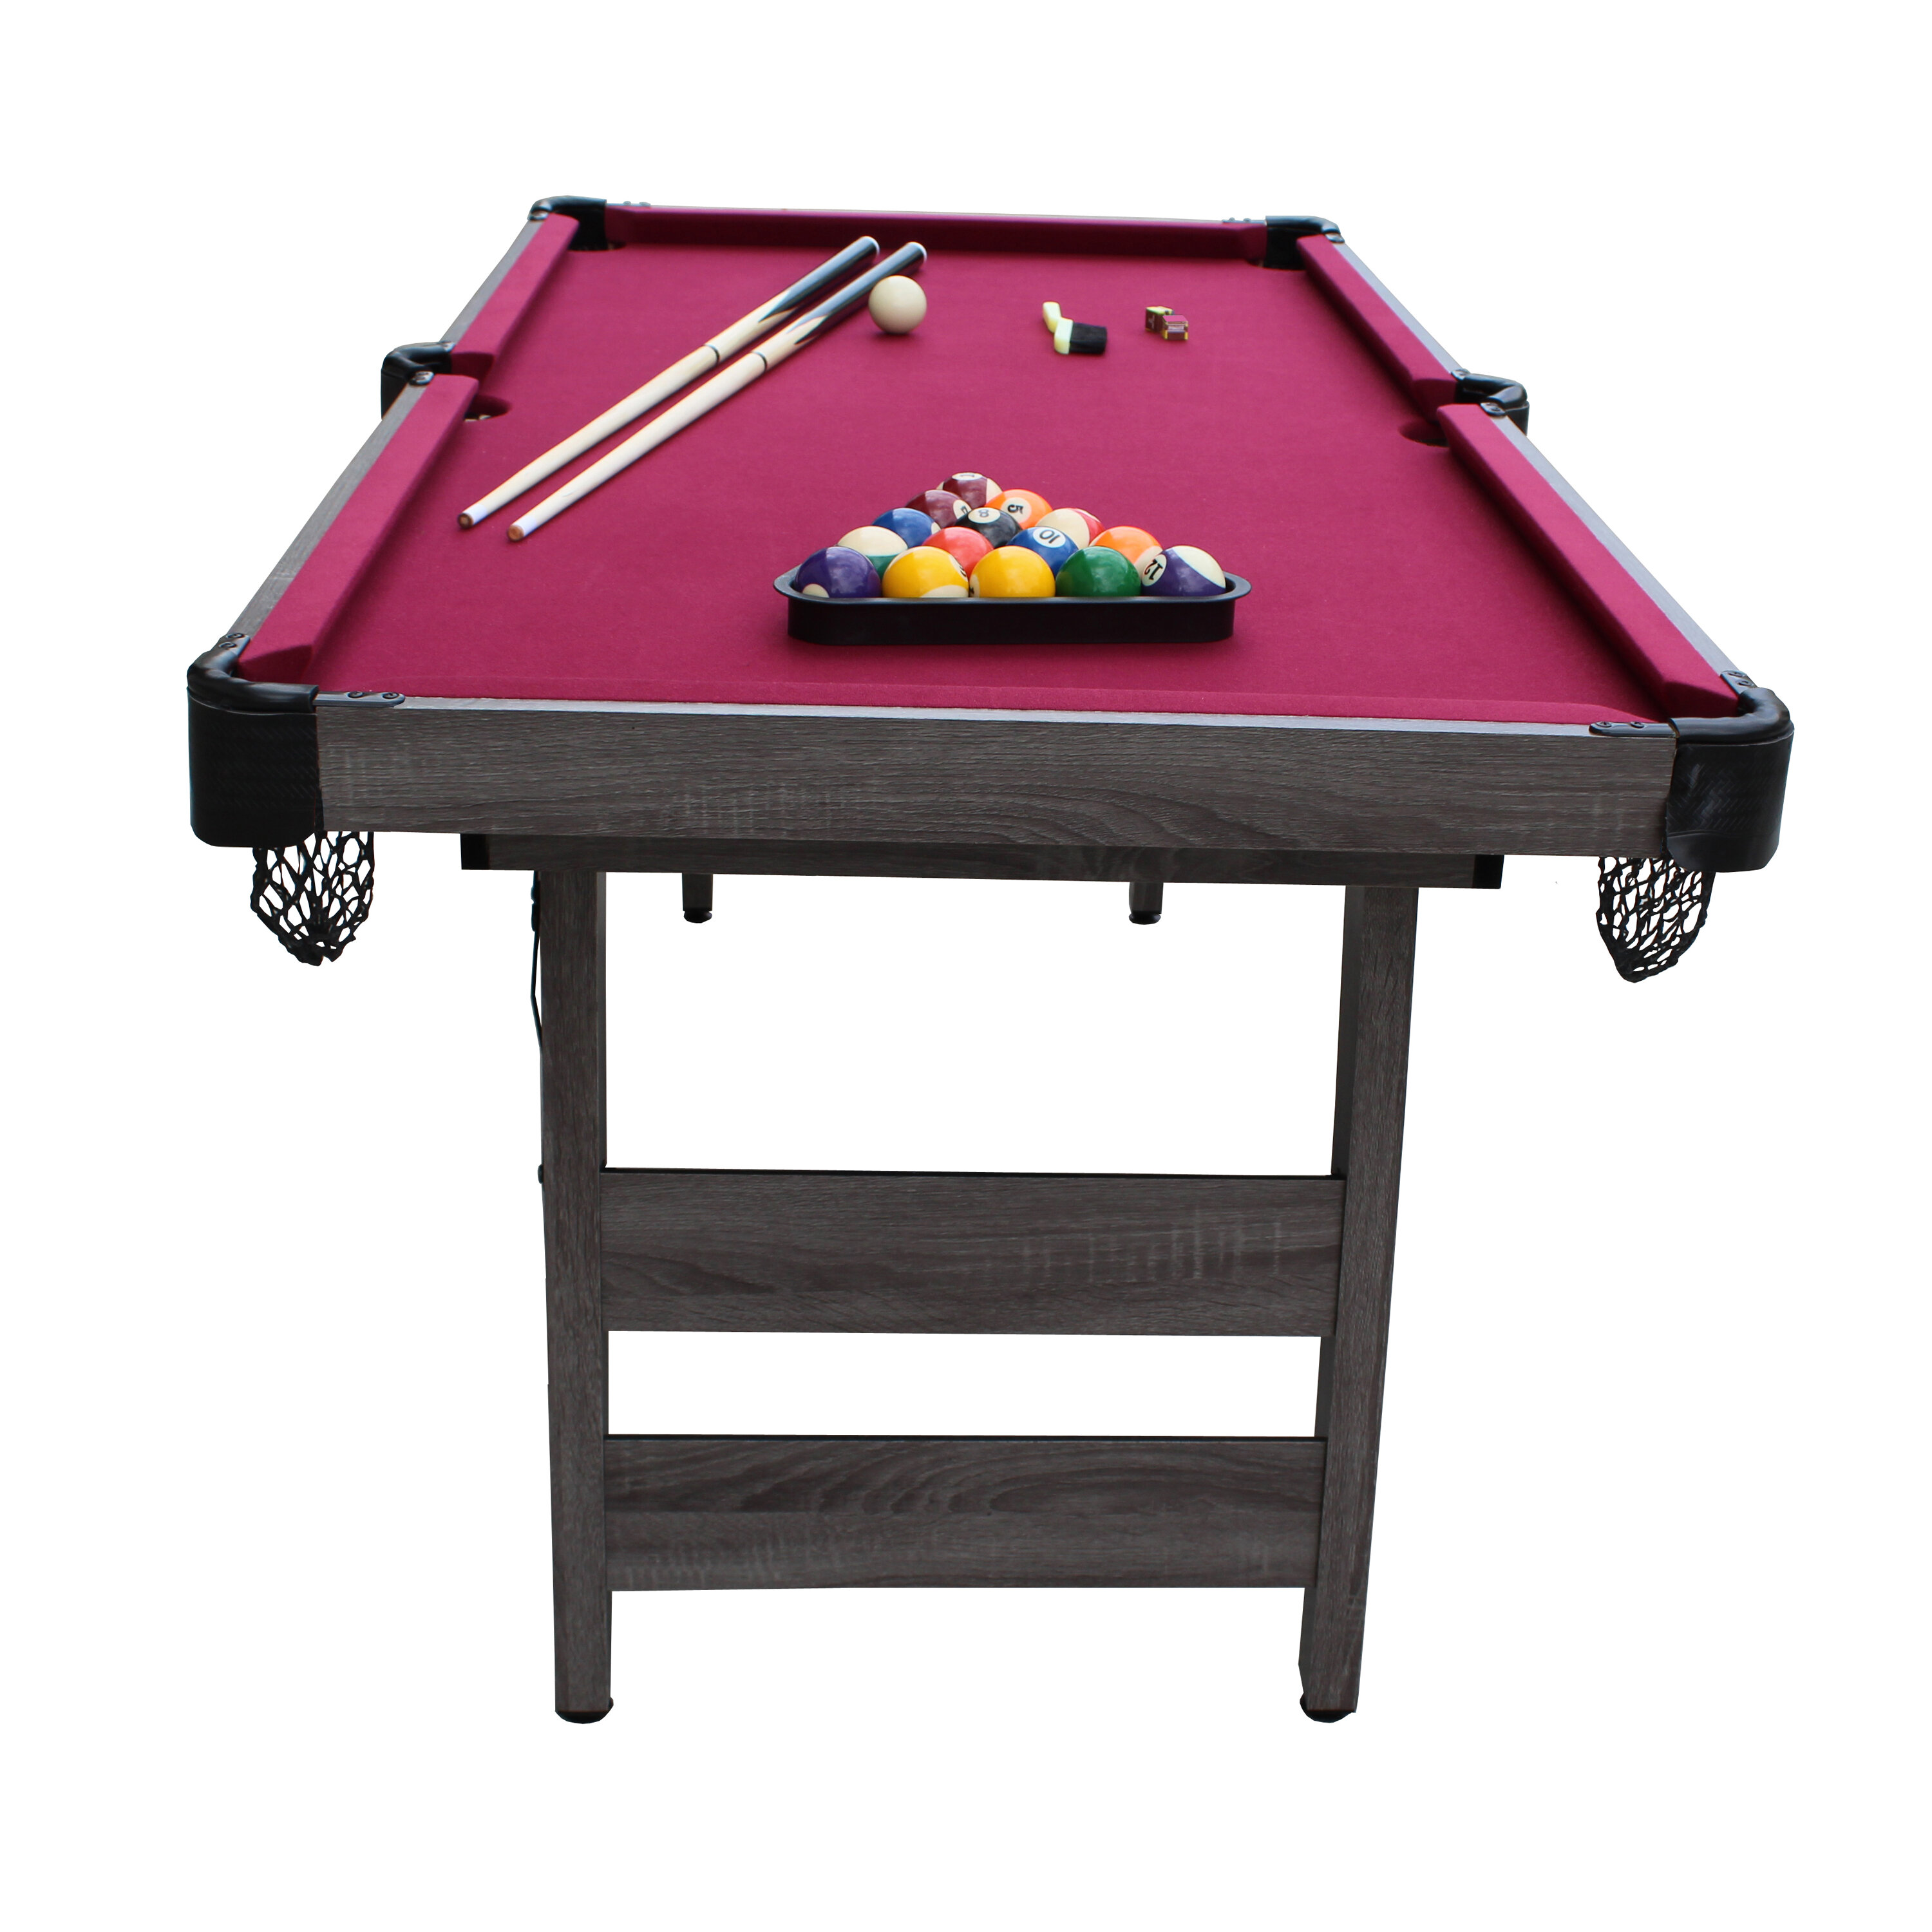 Professional Billiards Pool Tablecloth Pool Table Cushion Set Felt Table Cloth Pad for Indoor Billiard Sports Pool Table Cloth Accessories